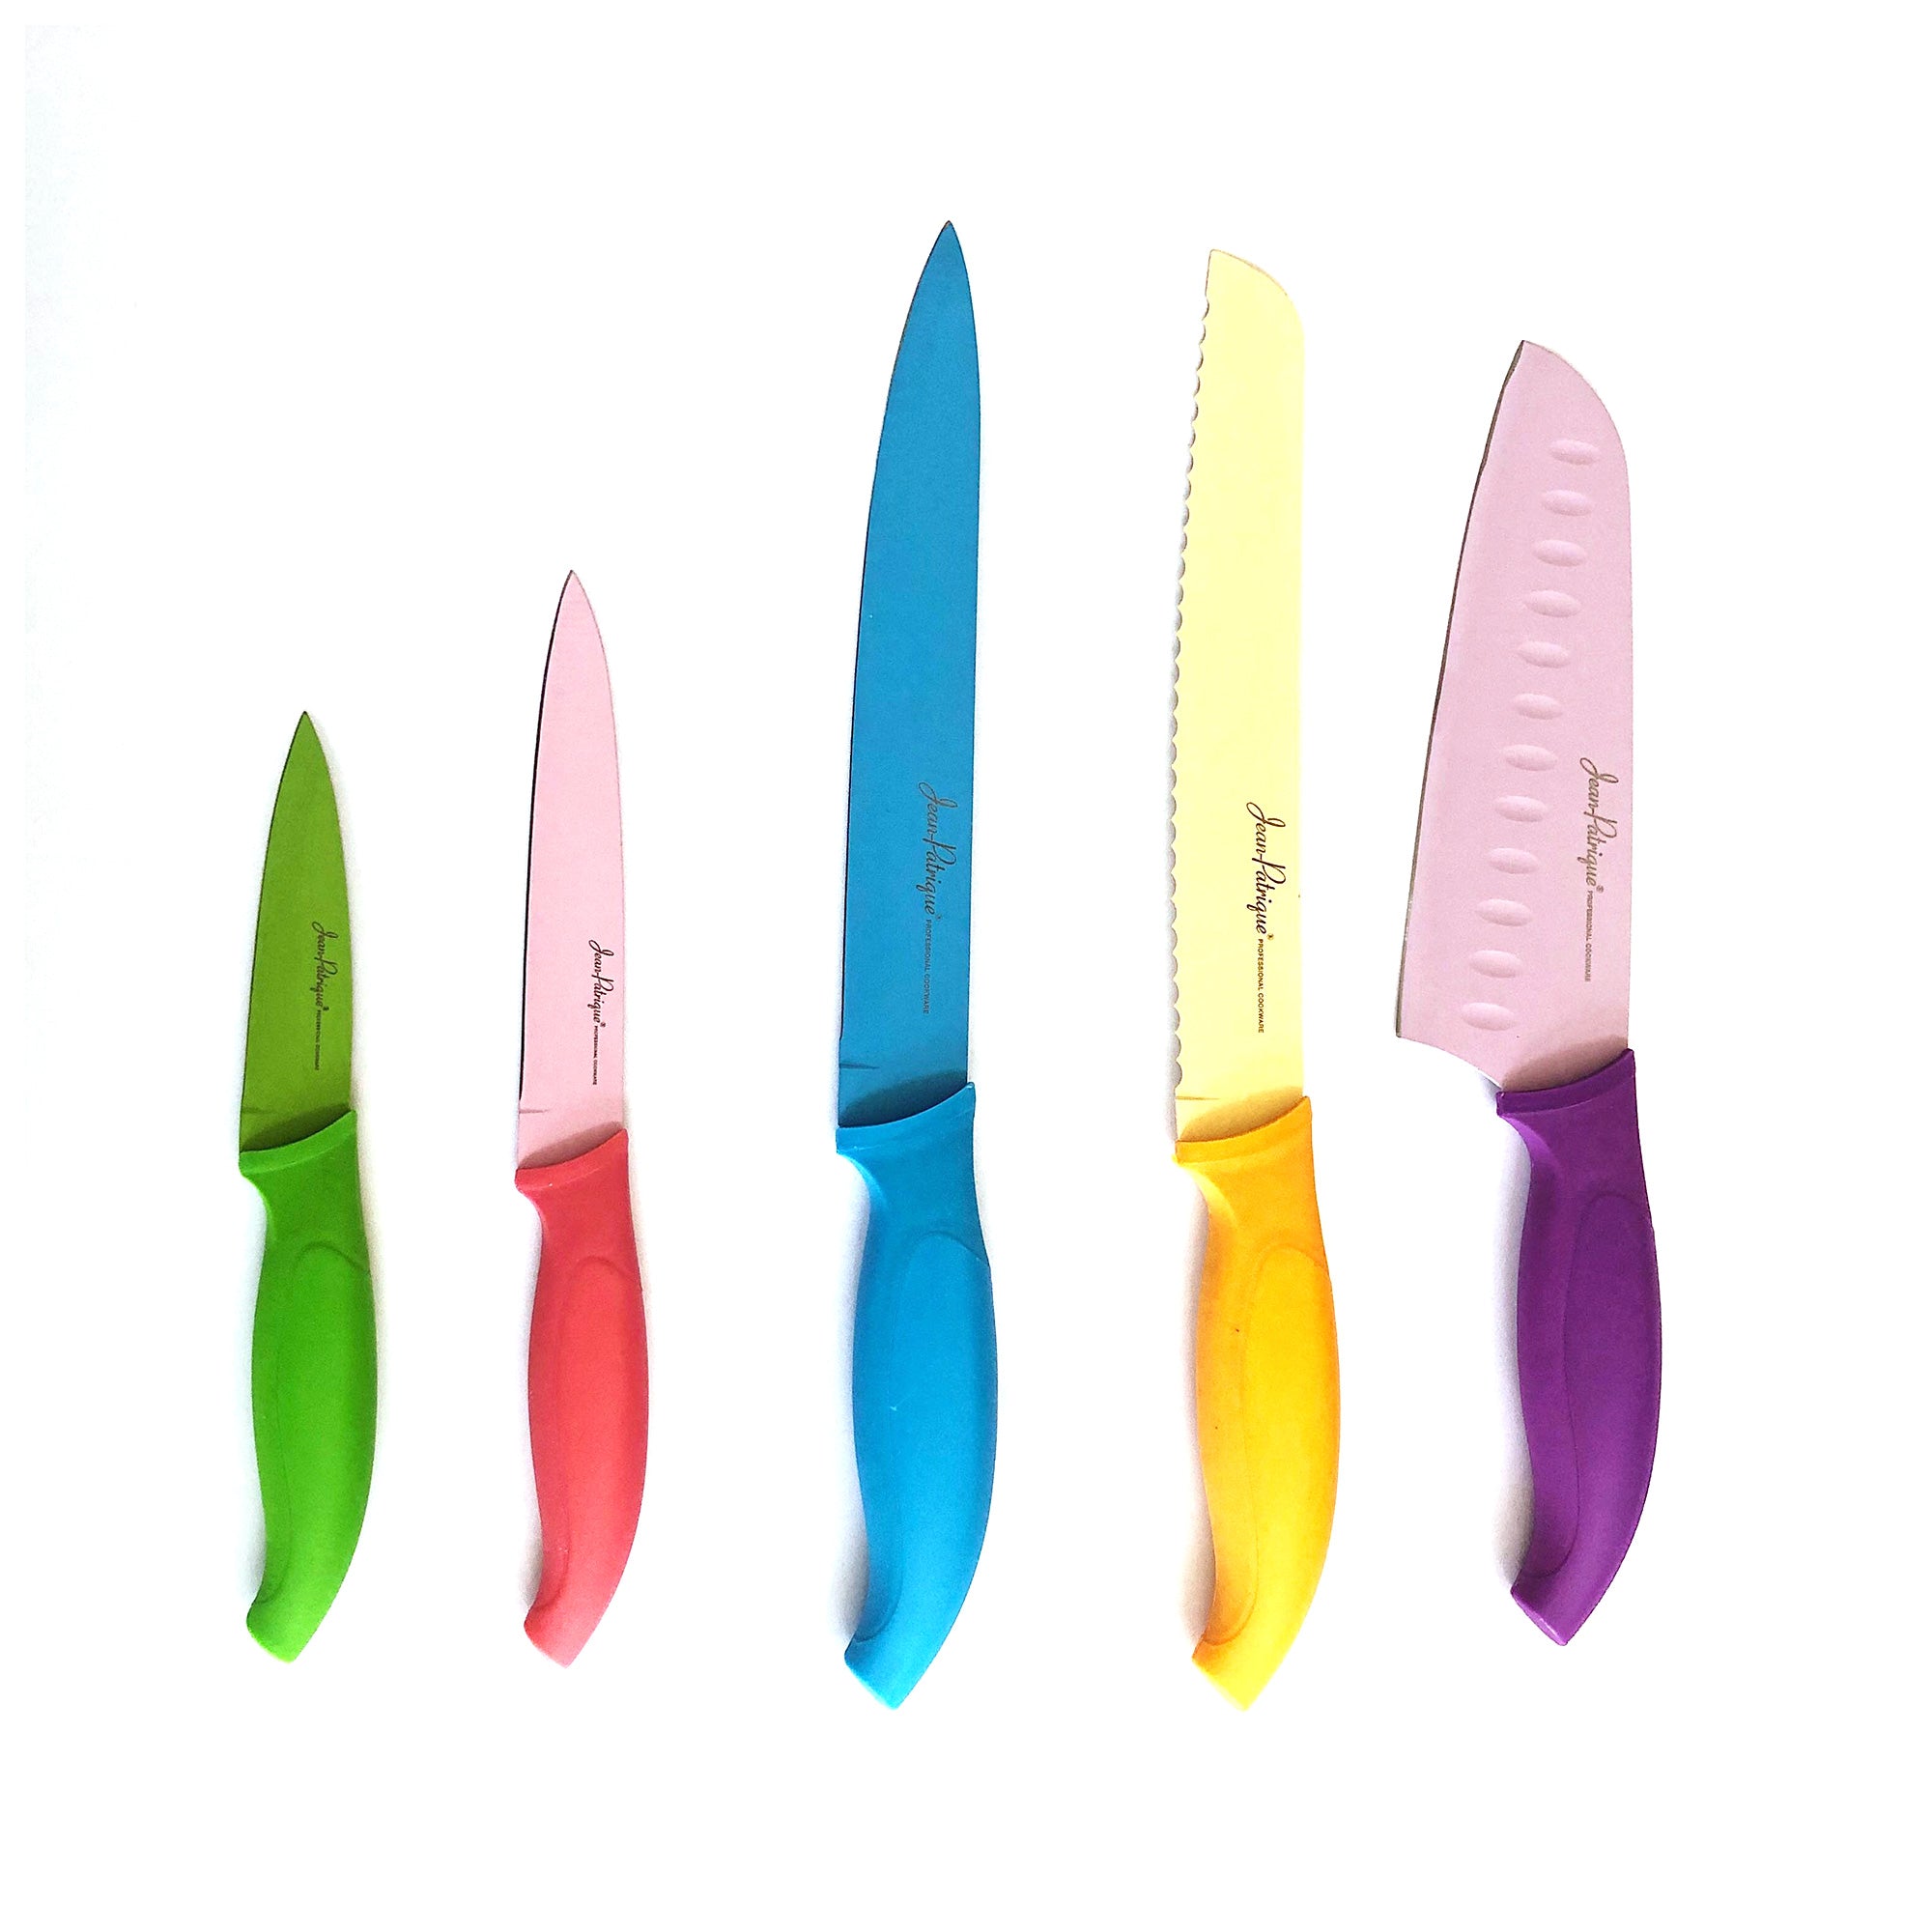 Chopaholic Essential Kitchen Knives - Set of 5, Jean Patrique Professional  Cookware